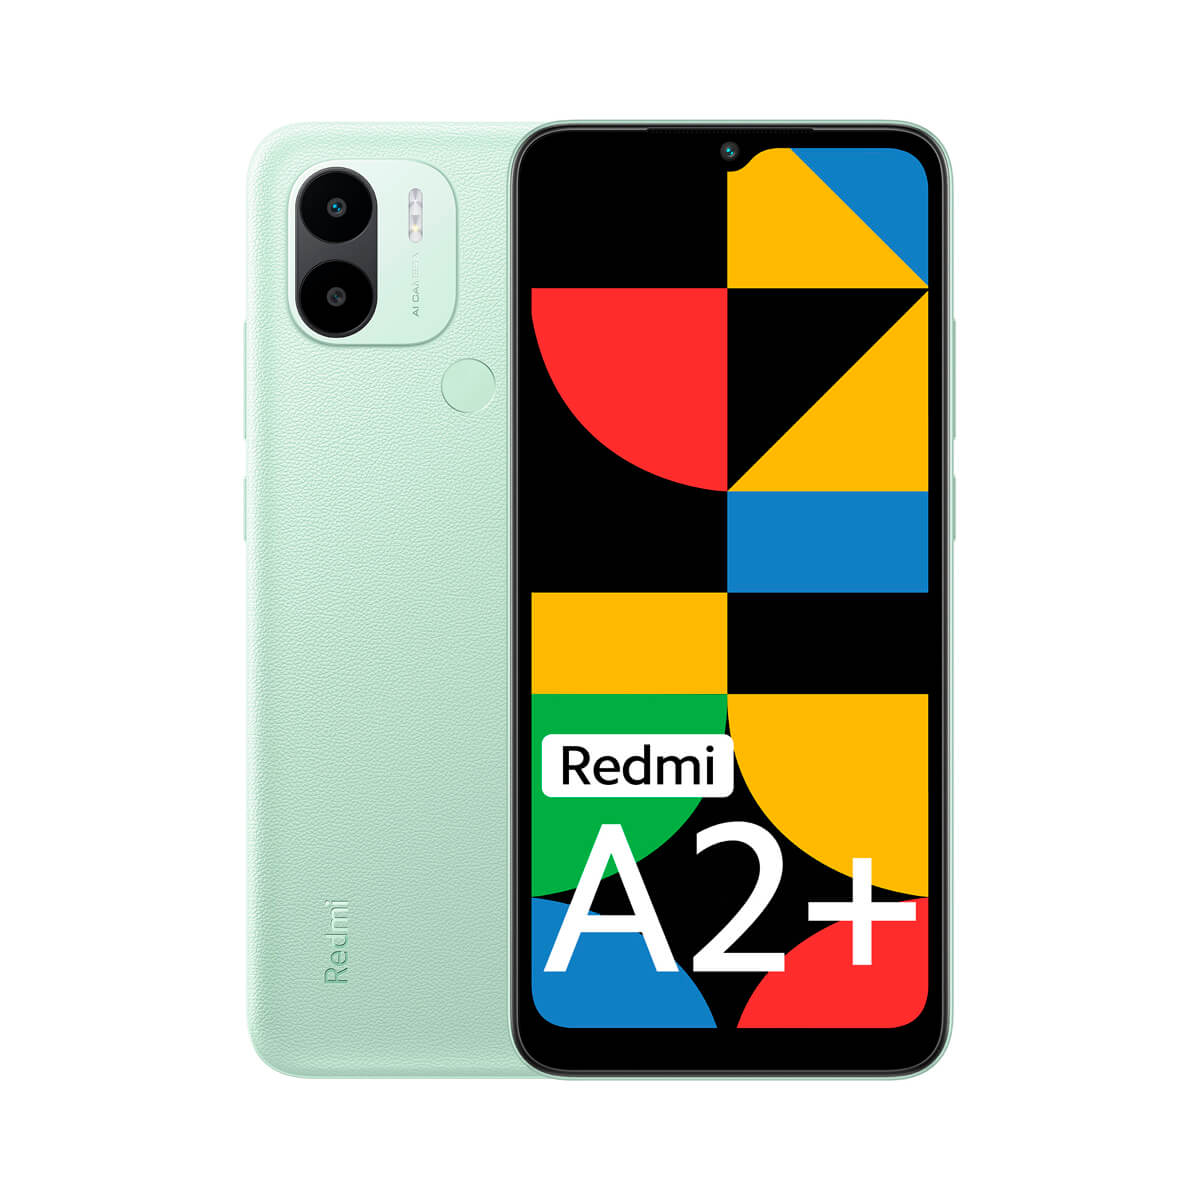 Xiaomi Redmi A2 2GB/32GB Green (Sea Green) Dual SIM